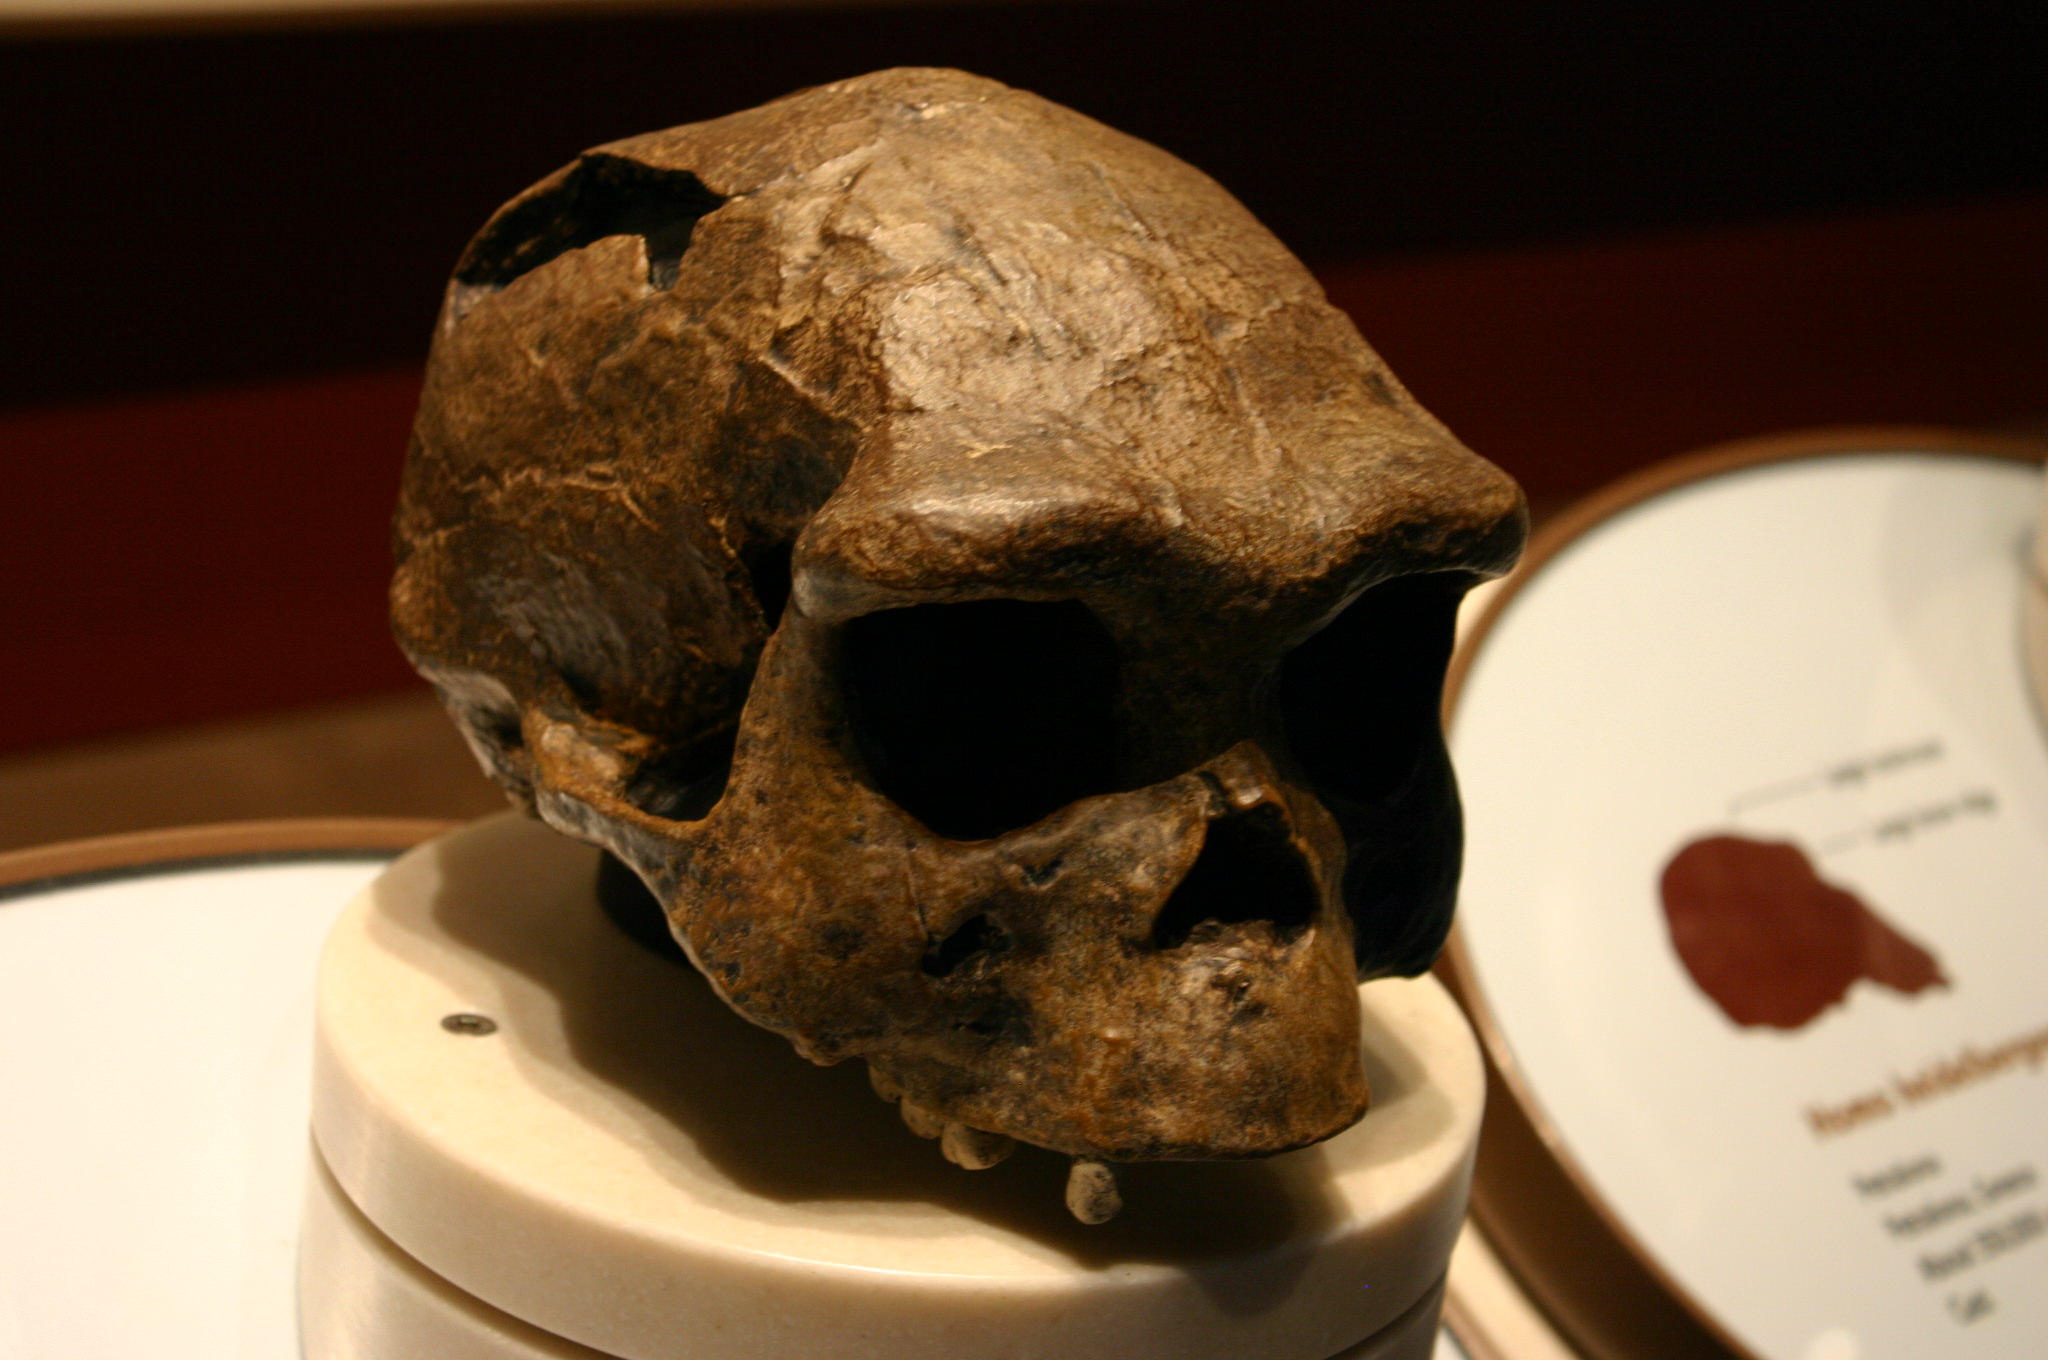 Kerangka dari gua Sima de los Huesos telah ditetapkan untuk spesies manusia purba yang dikenal sebagai Homo heidelbergensis. Namun, para peneliti mengatakan struktur kerangka mirip dengan Neanderthal - sedemikian rupa sehingga beberapa orang mengatakan orang-orang Sima de los Huesos sebenarnya adalah Neanderthal daripada perwakilan Homo heidelbergensis.